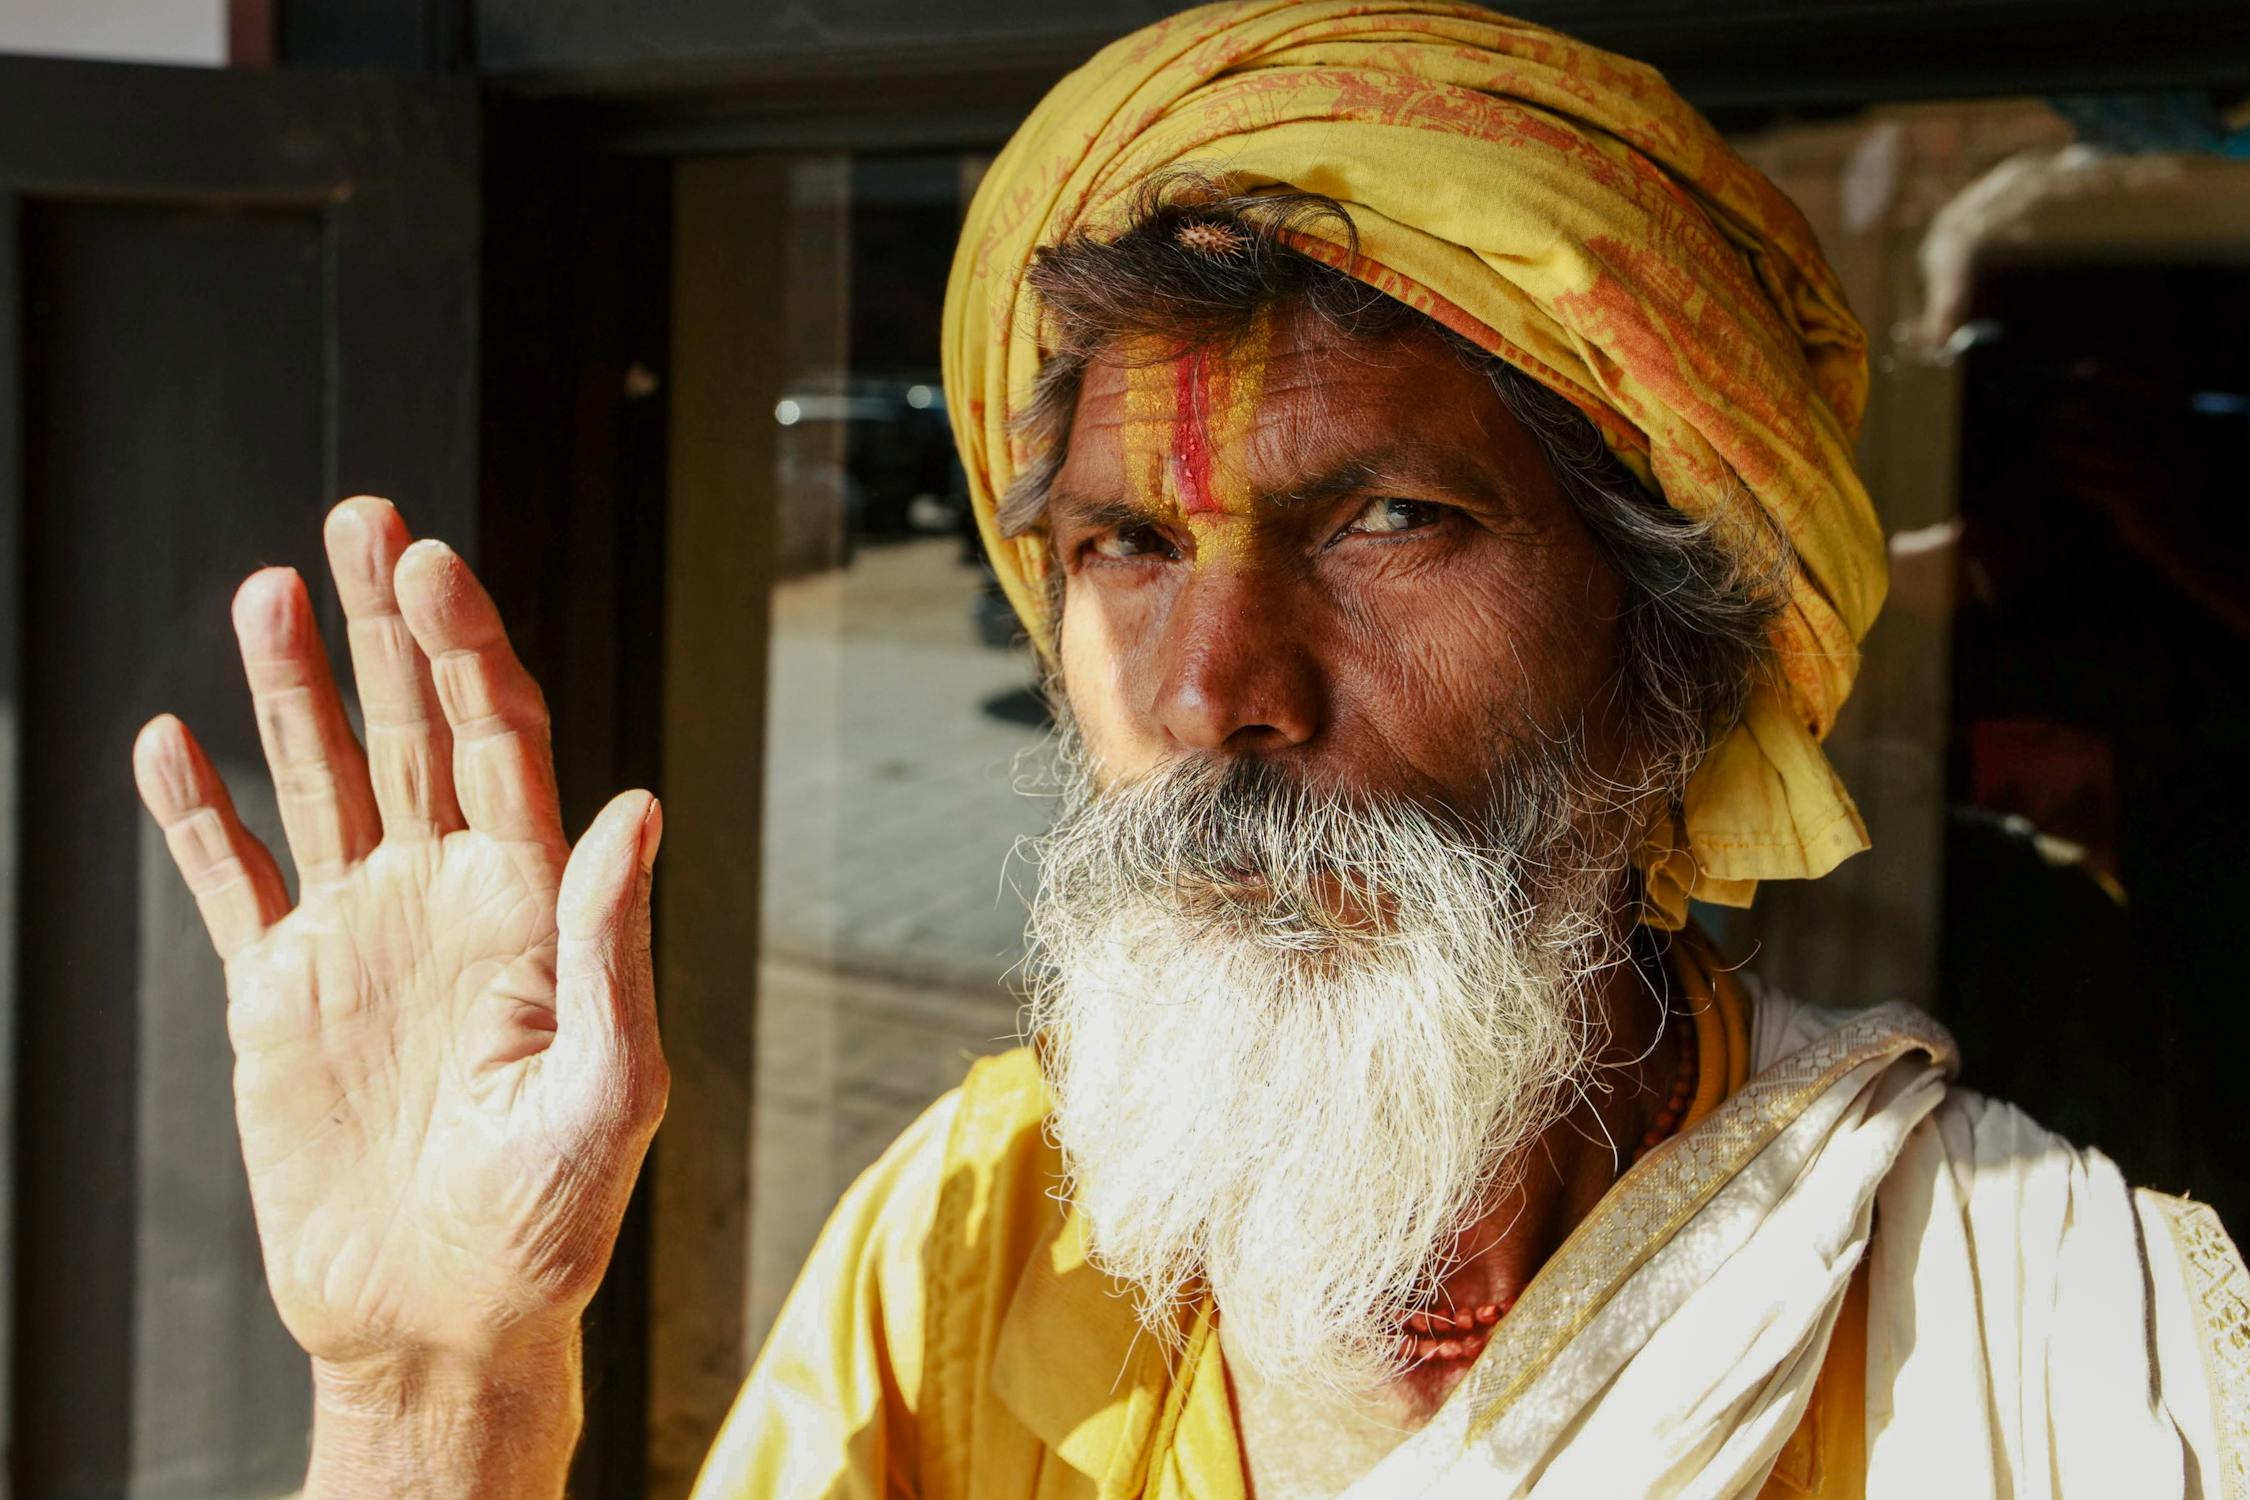 Hindu Priest Photo by Mehmet Turgut  Kirkgoz  from Pexels: https://www.pexels.com/photo/hindu-priest-in-turban-13770774/